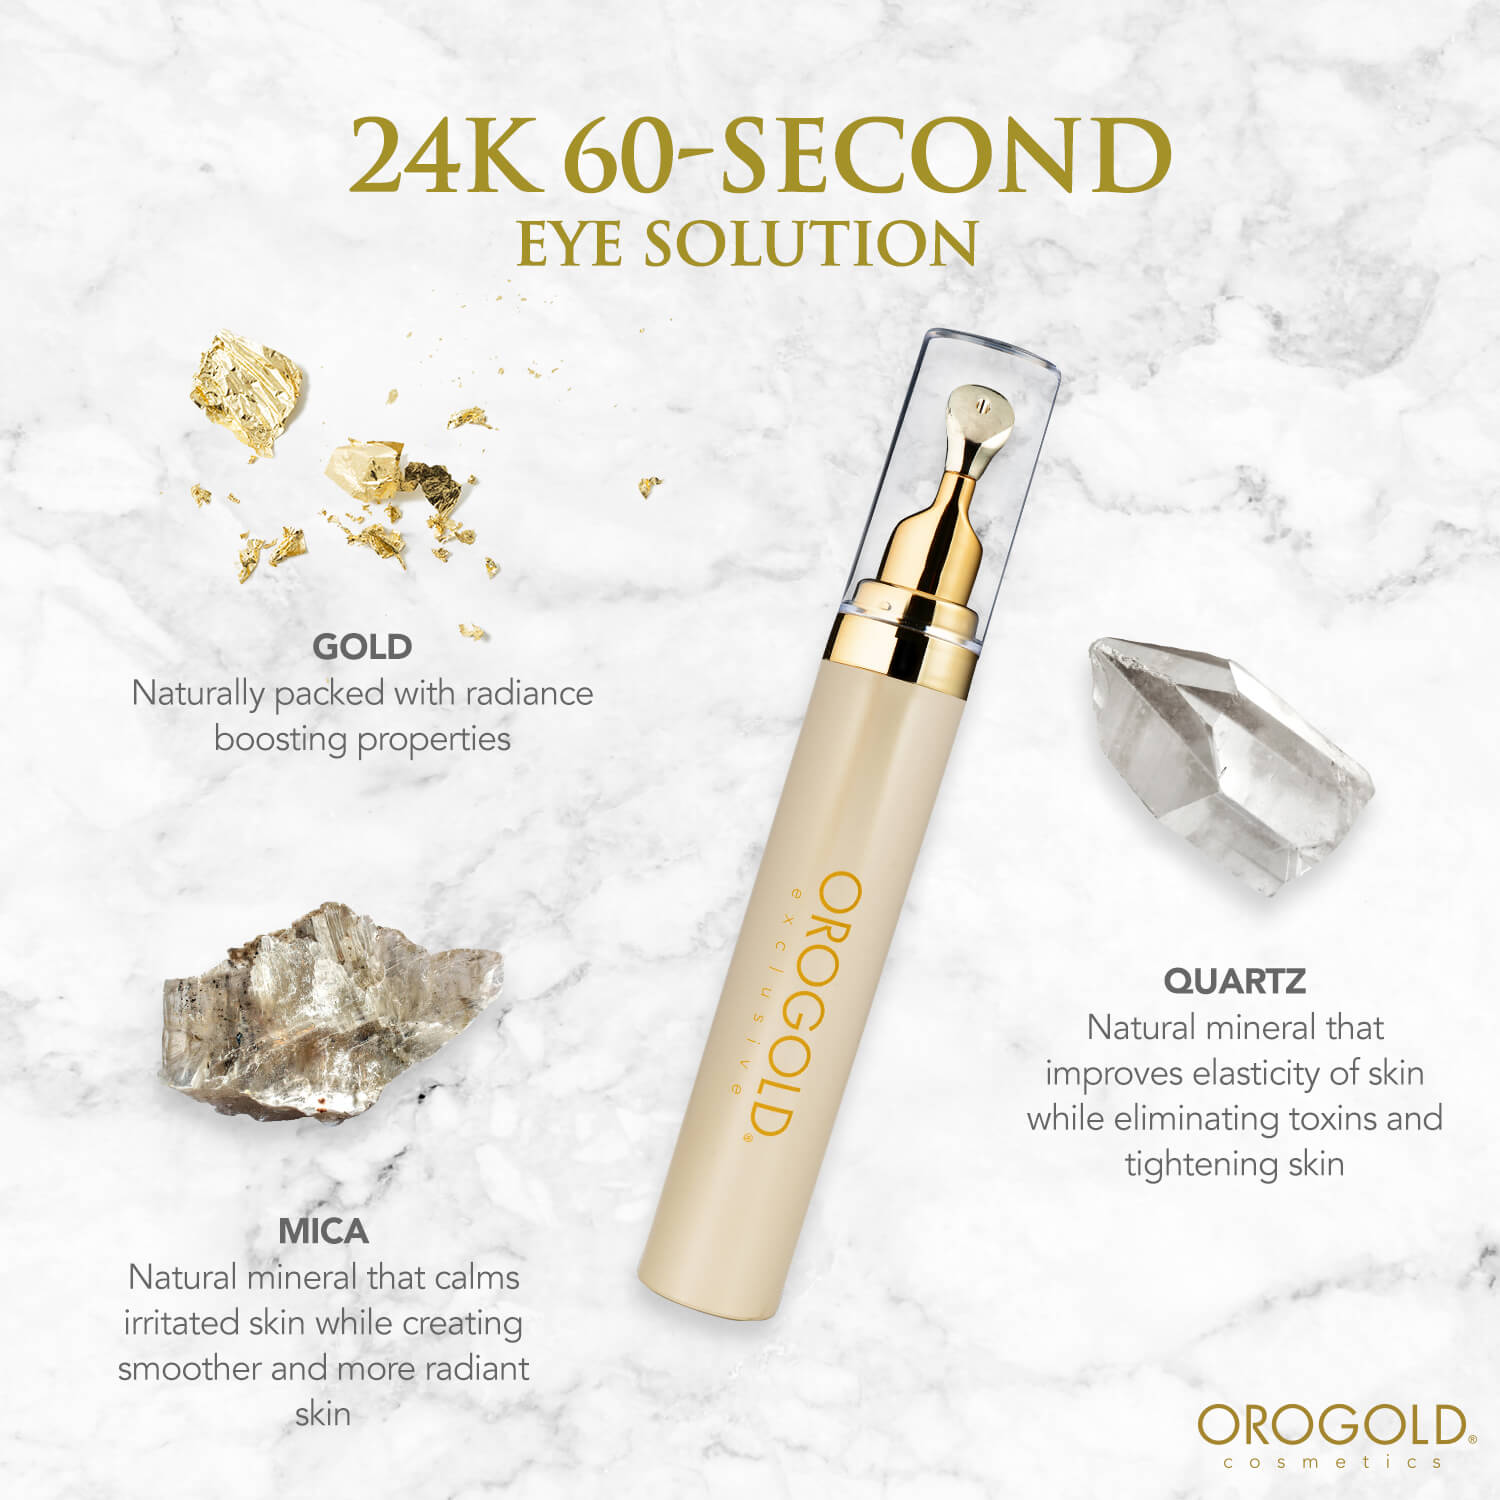 24k 60 second eye solution